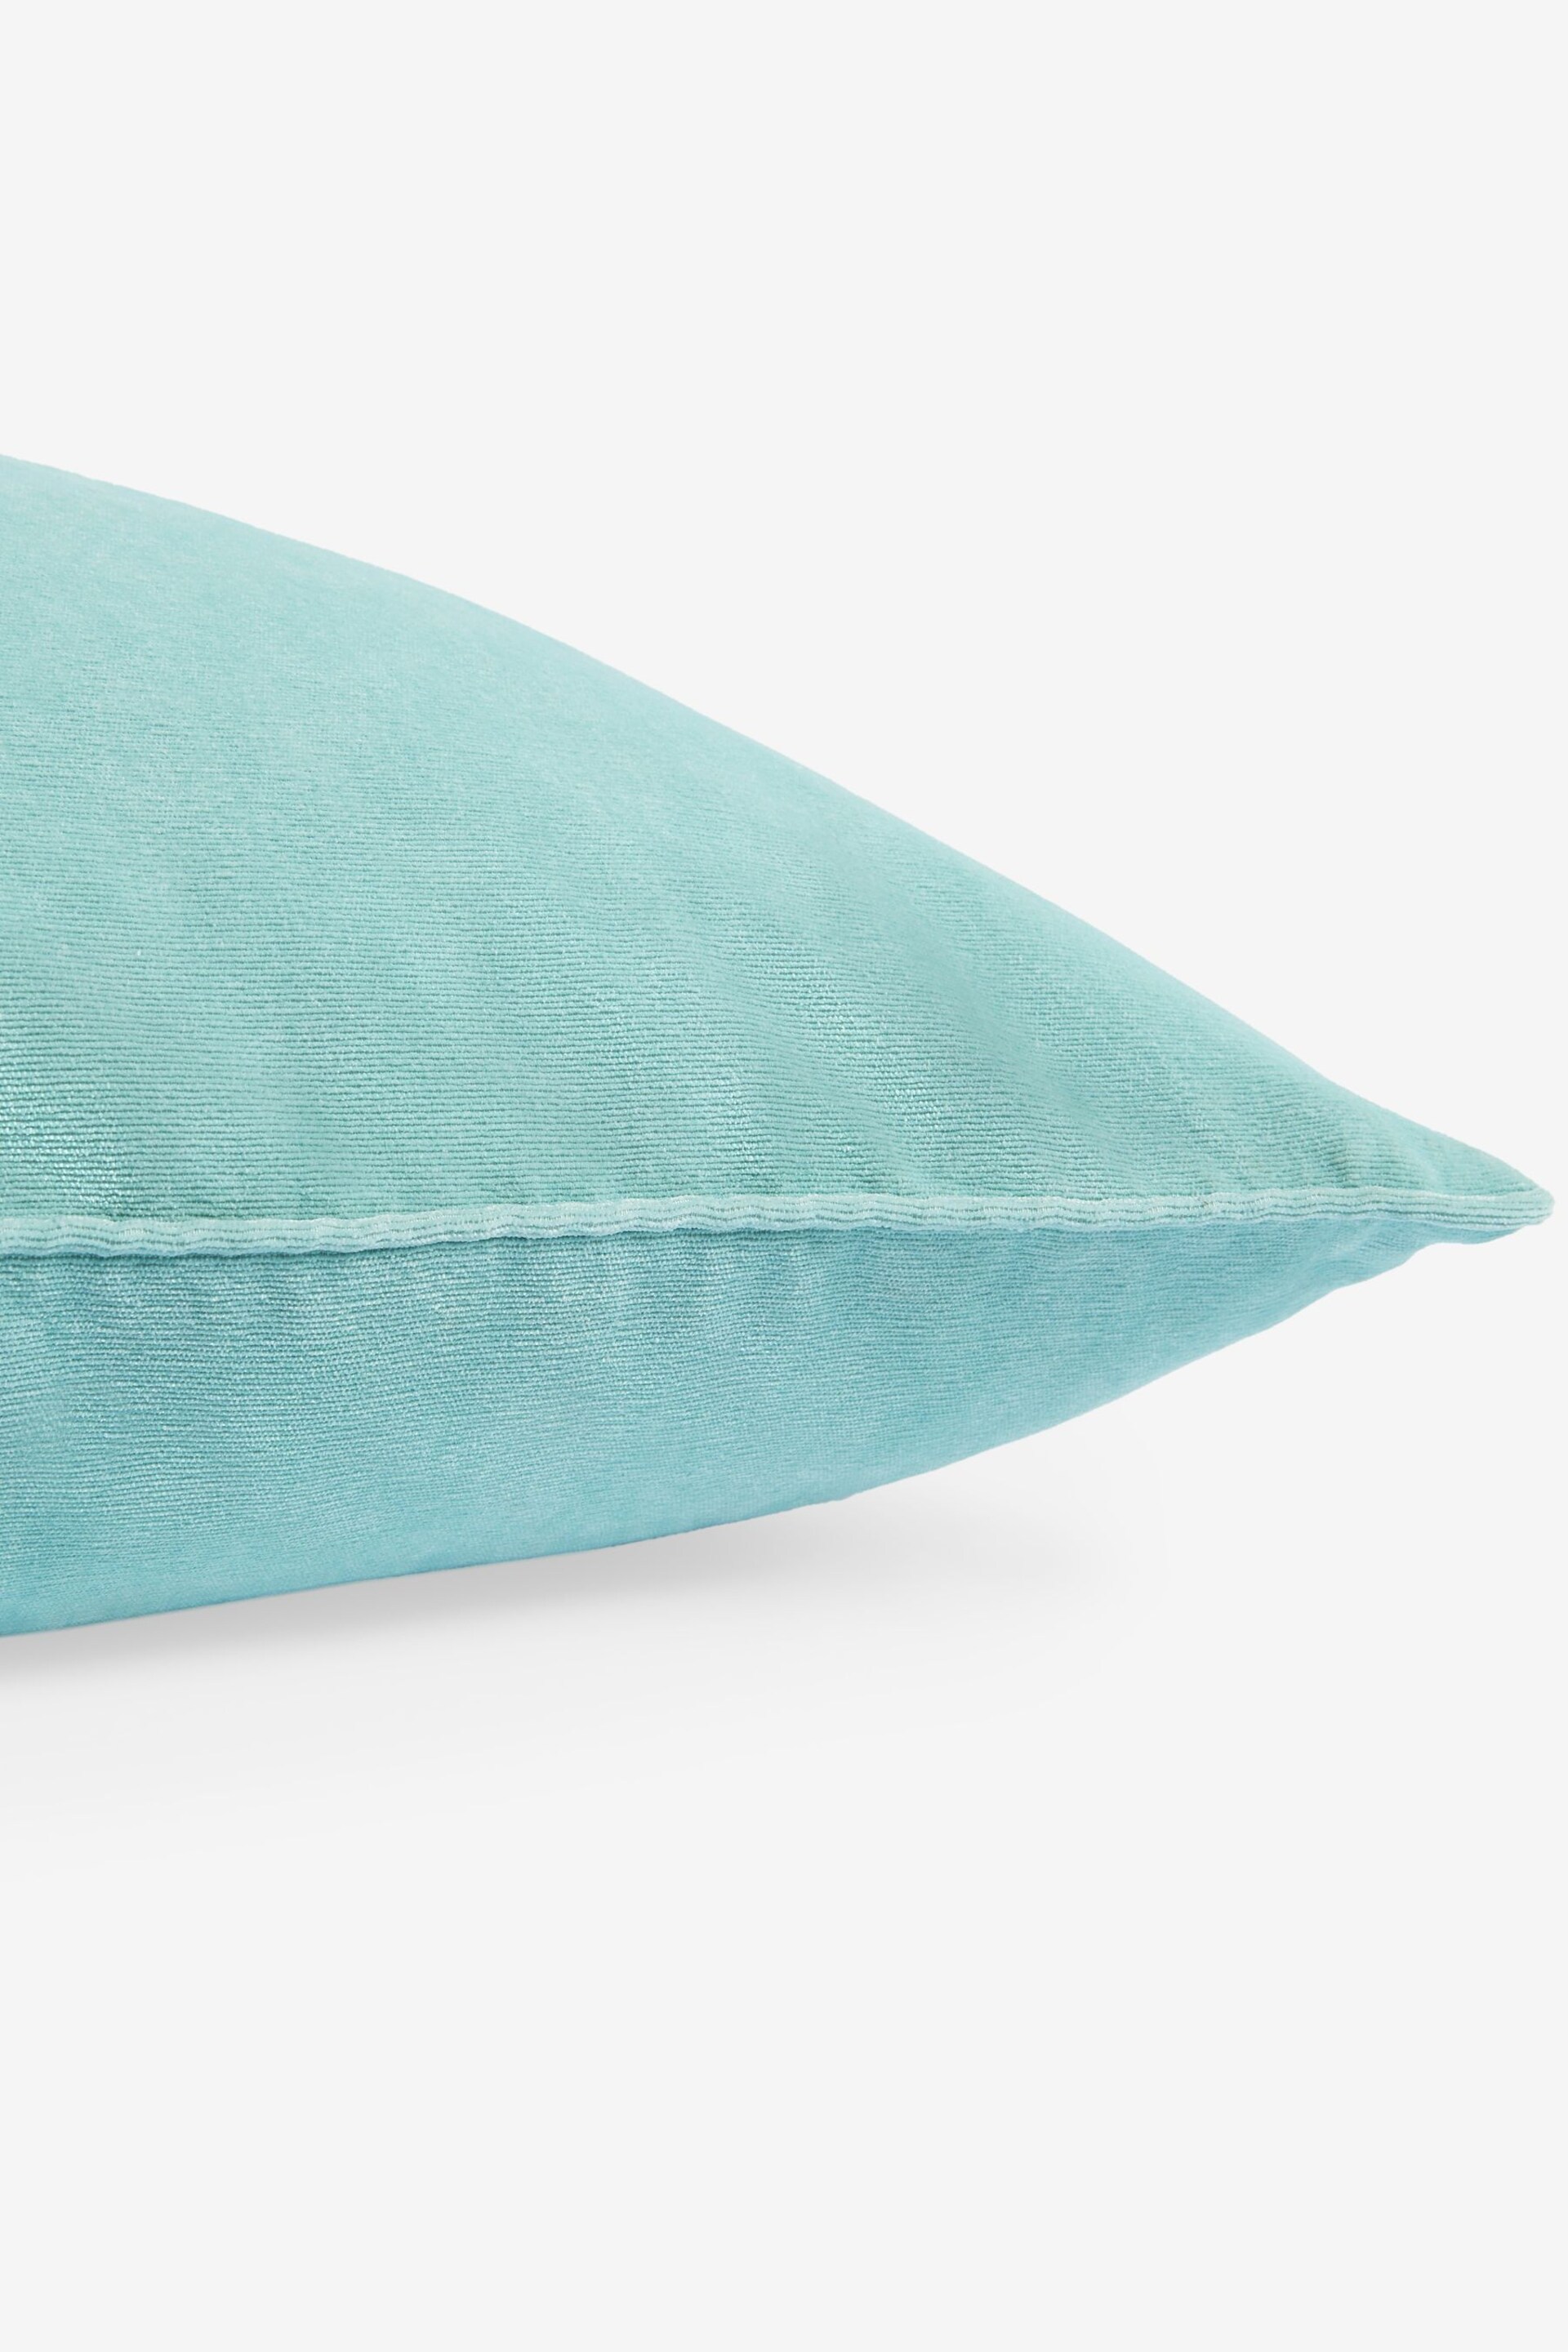 Teal Blue 59 x 59cm Soft velour Cushion - Image 3 of 6